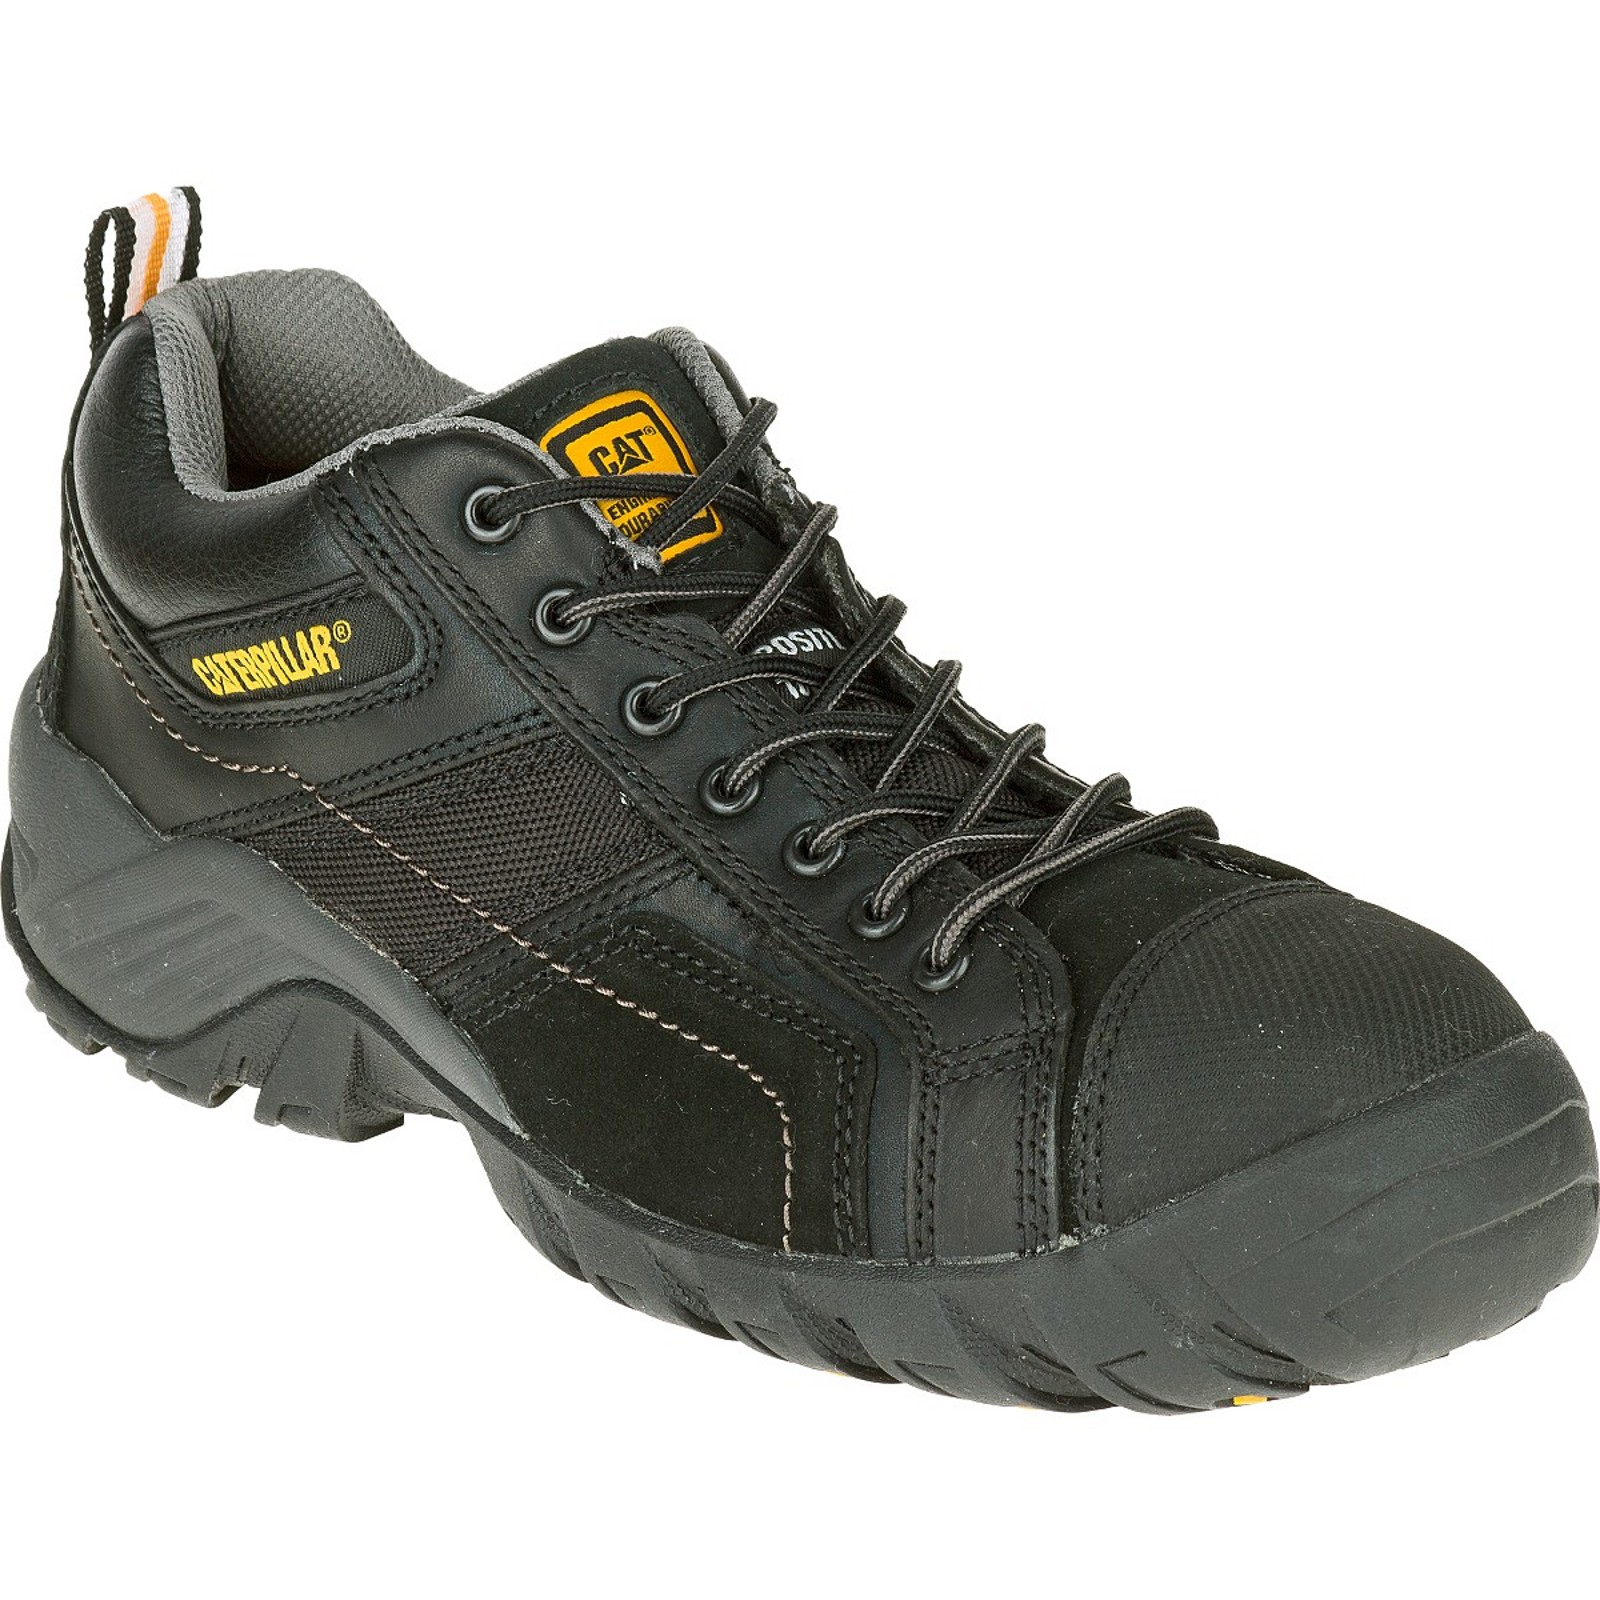 Cat Footwear Men's Argon Oxford Comp Toe Leather Work Shoe #89955 - Black